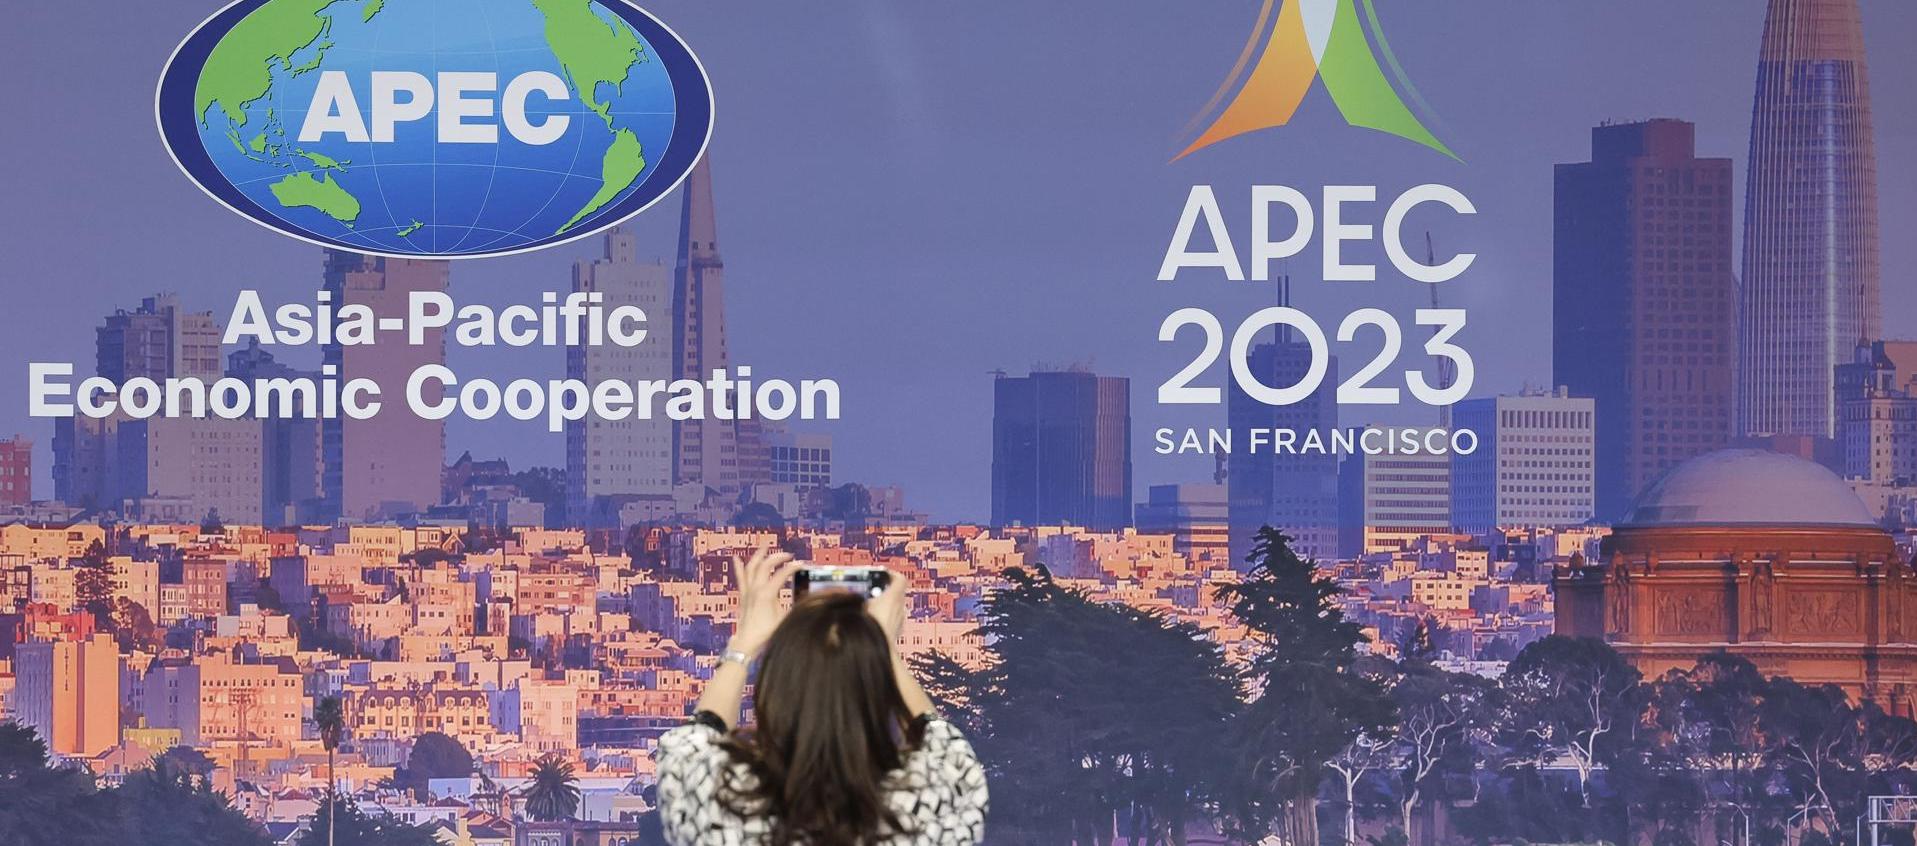 El Foro de Cooperación Económica Asia-Pacífico (APEC) se celebra en California